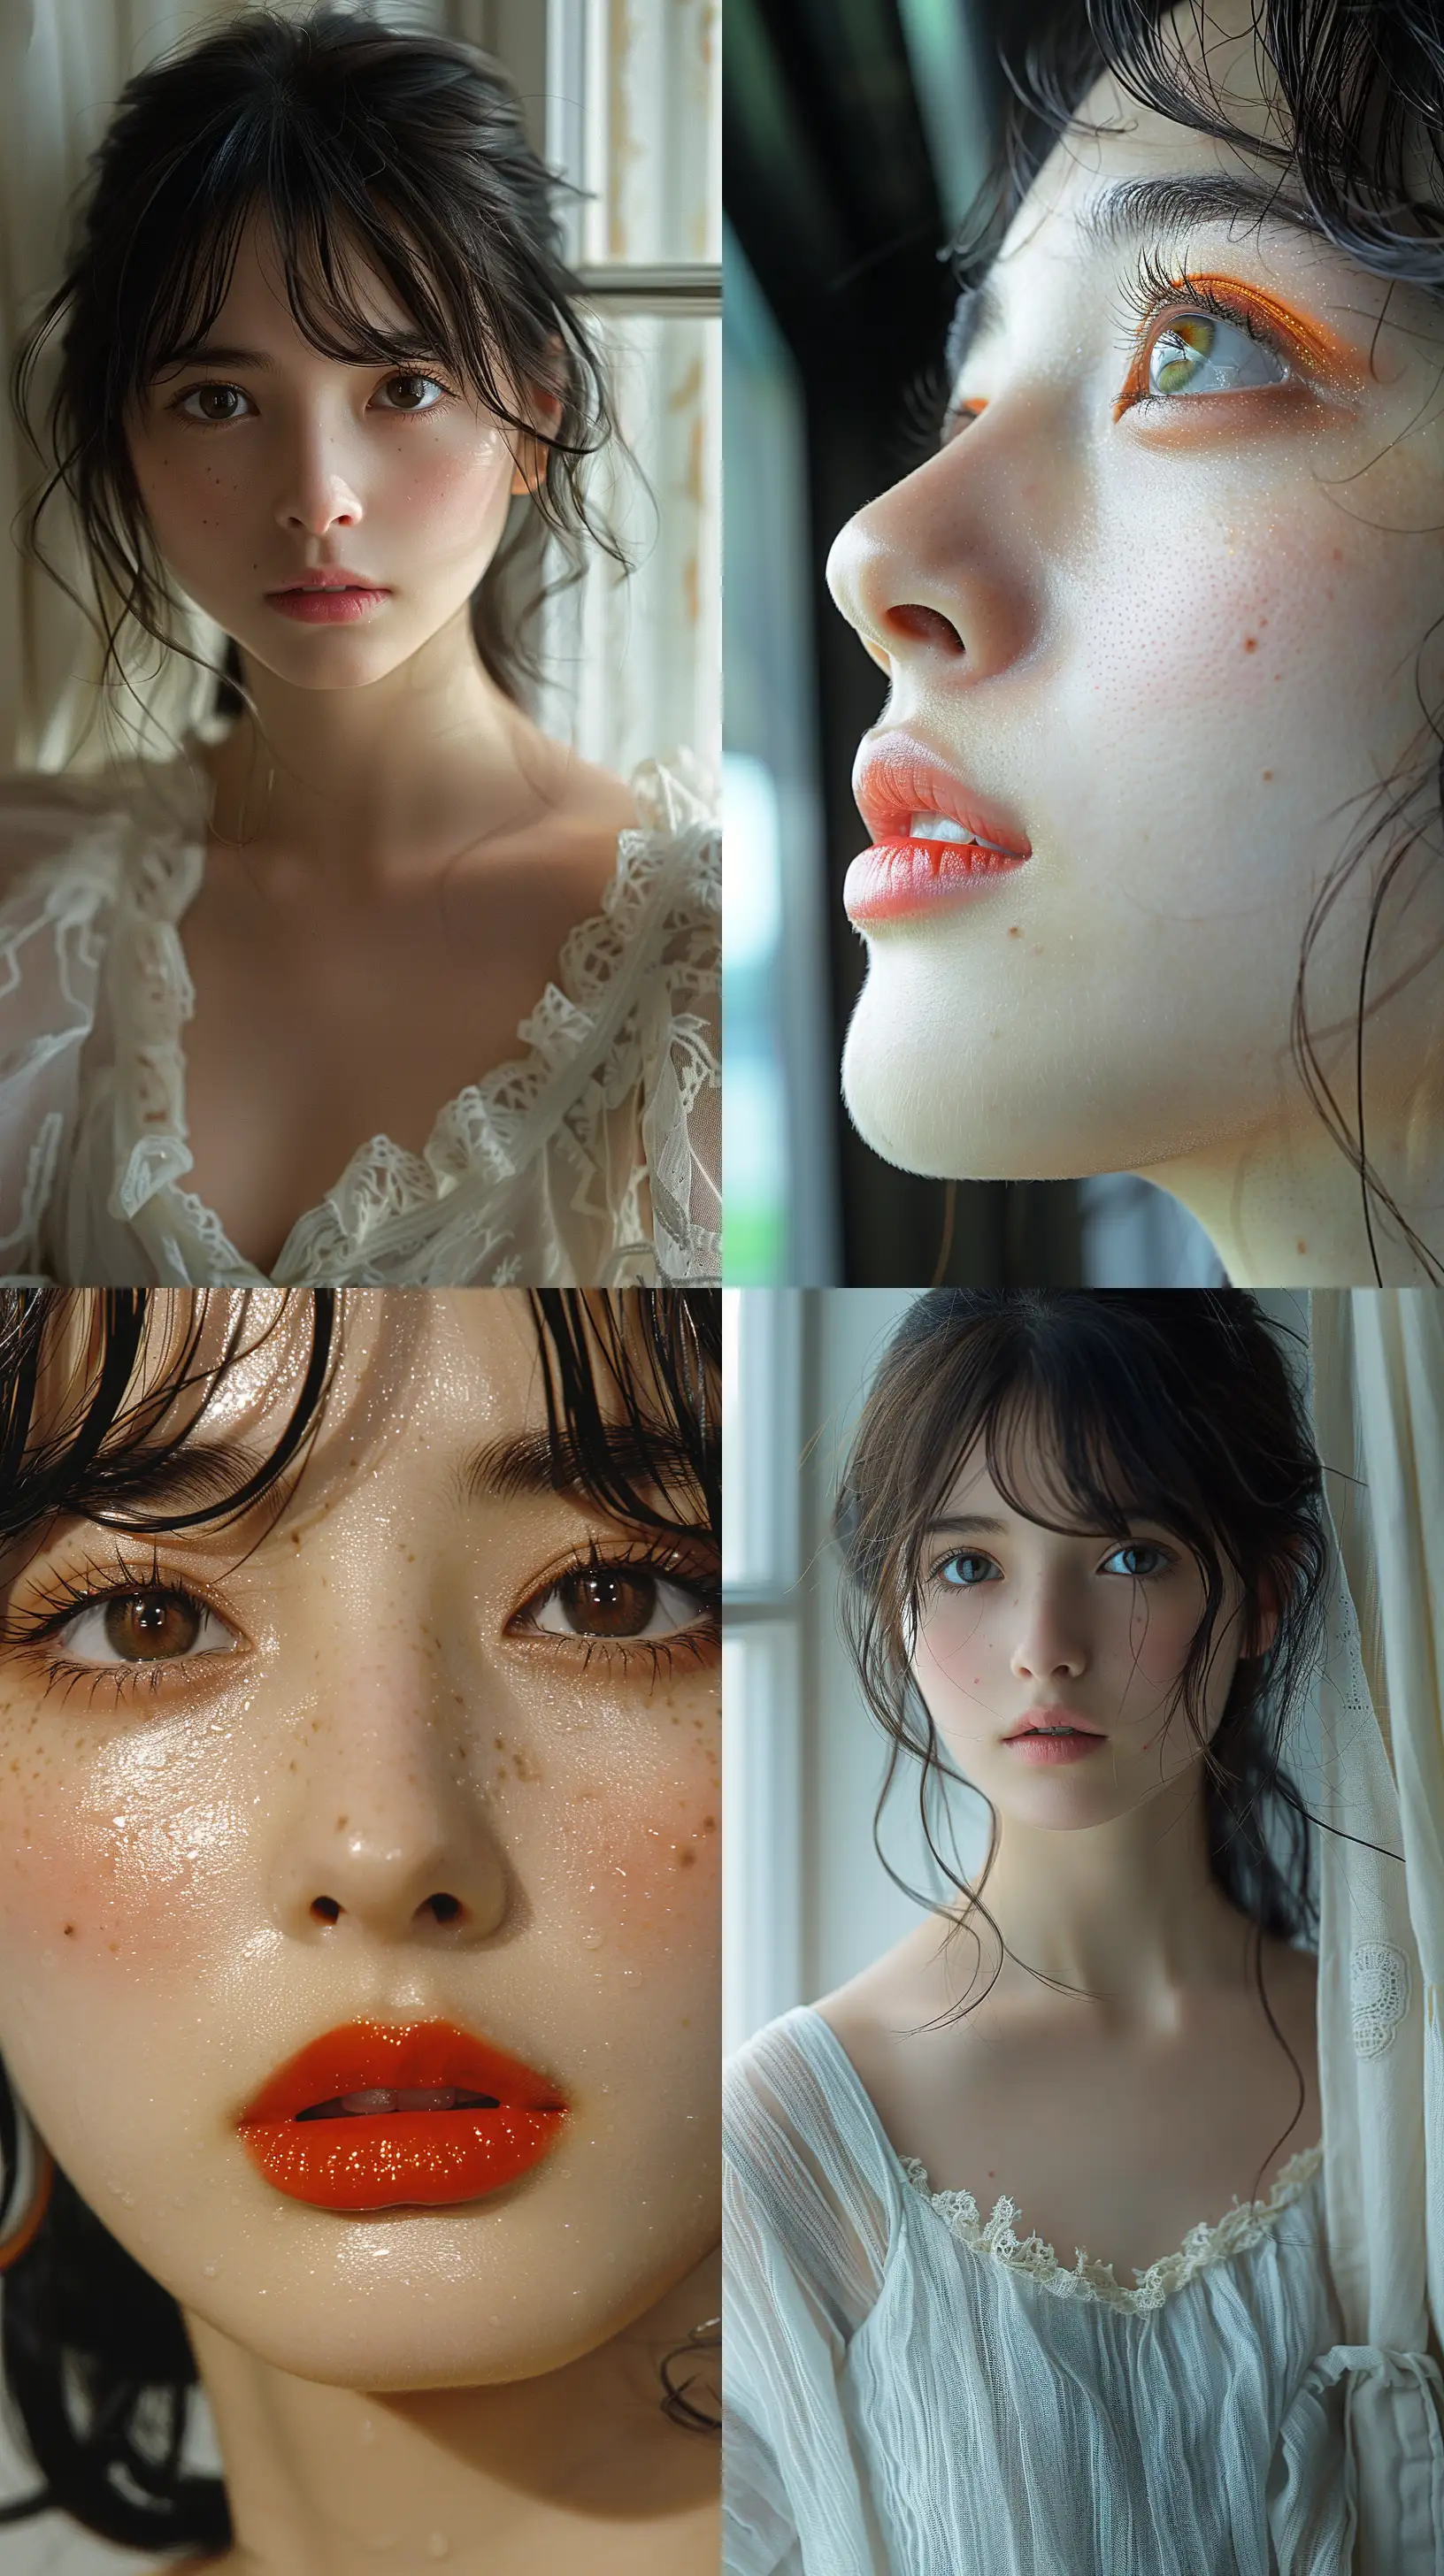 CloseUp-Portrait-of-Japanese-Girl-with-BabyFace-Quality-Captured-with-Kodak-Camera